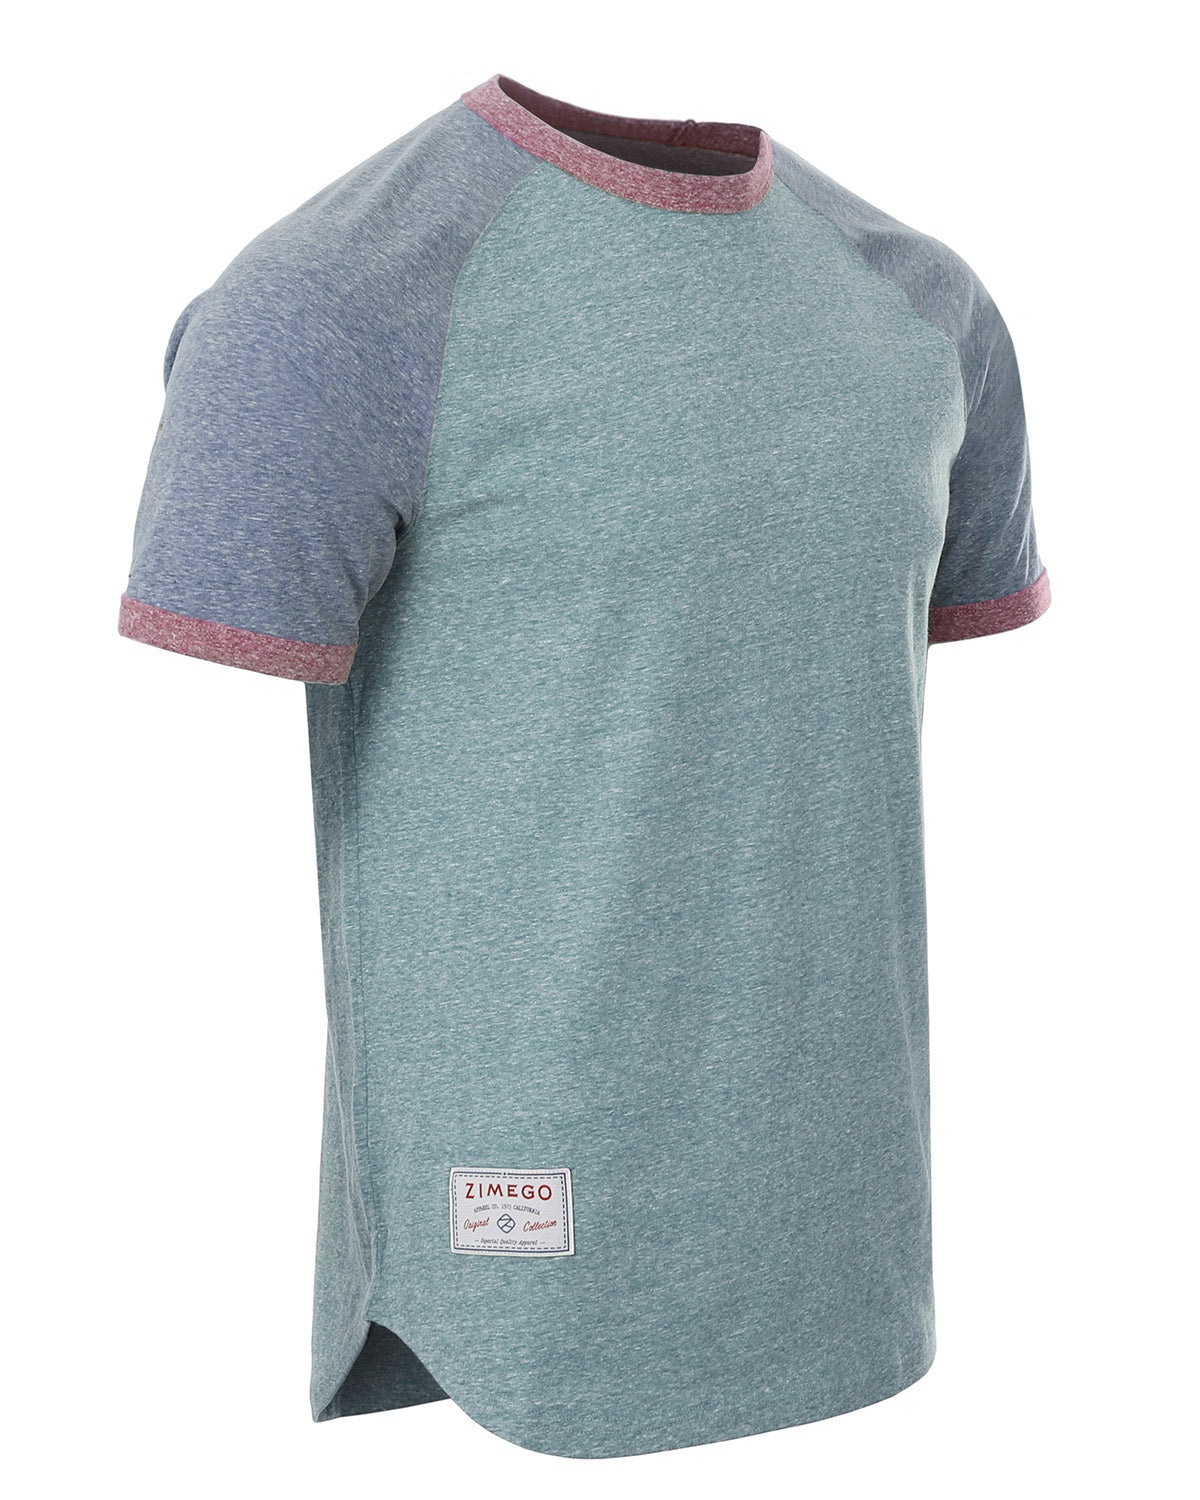 TEEK - Mens Short Sleeve Classic Retro Contrast Ringer T-Shirt TOPS TEEK M   